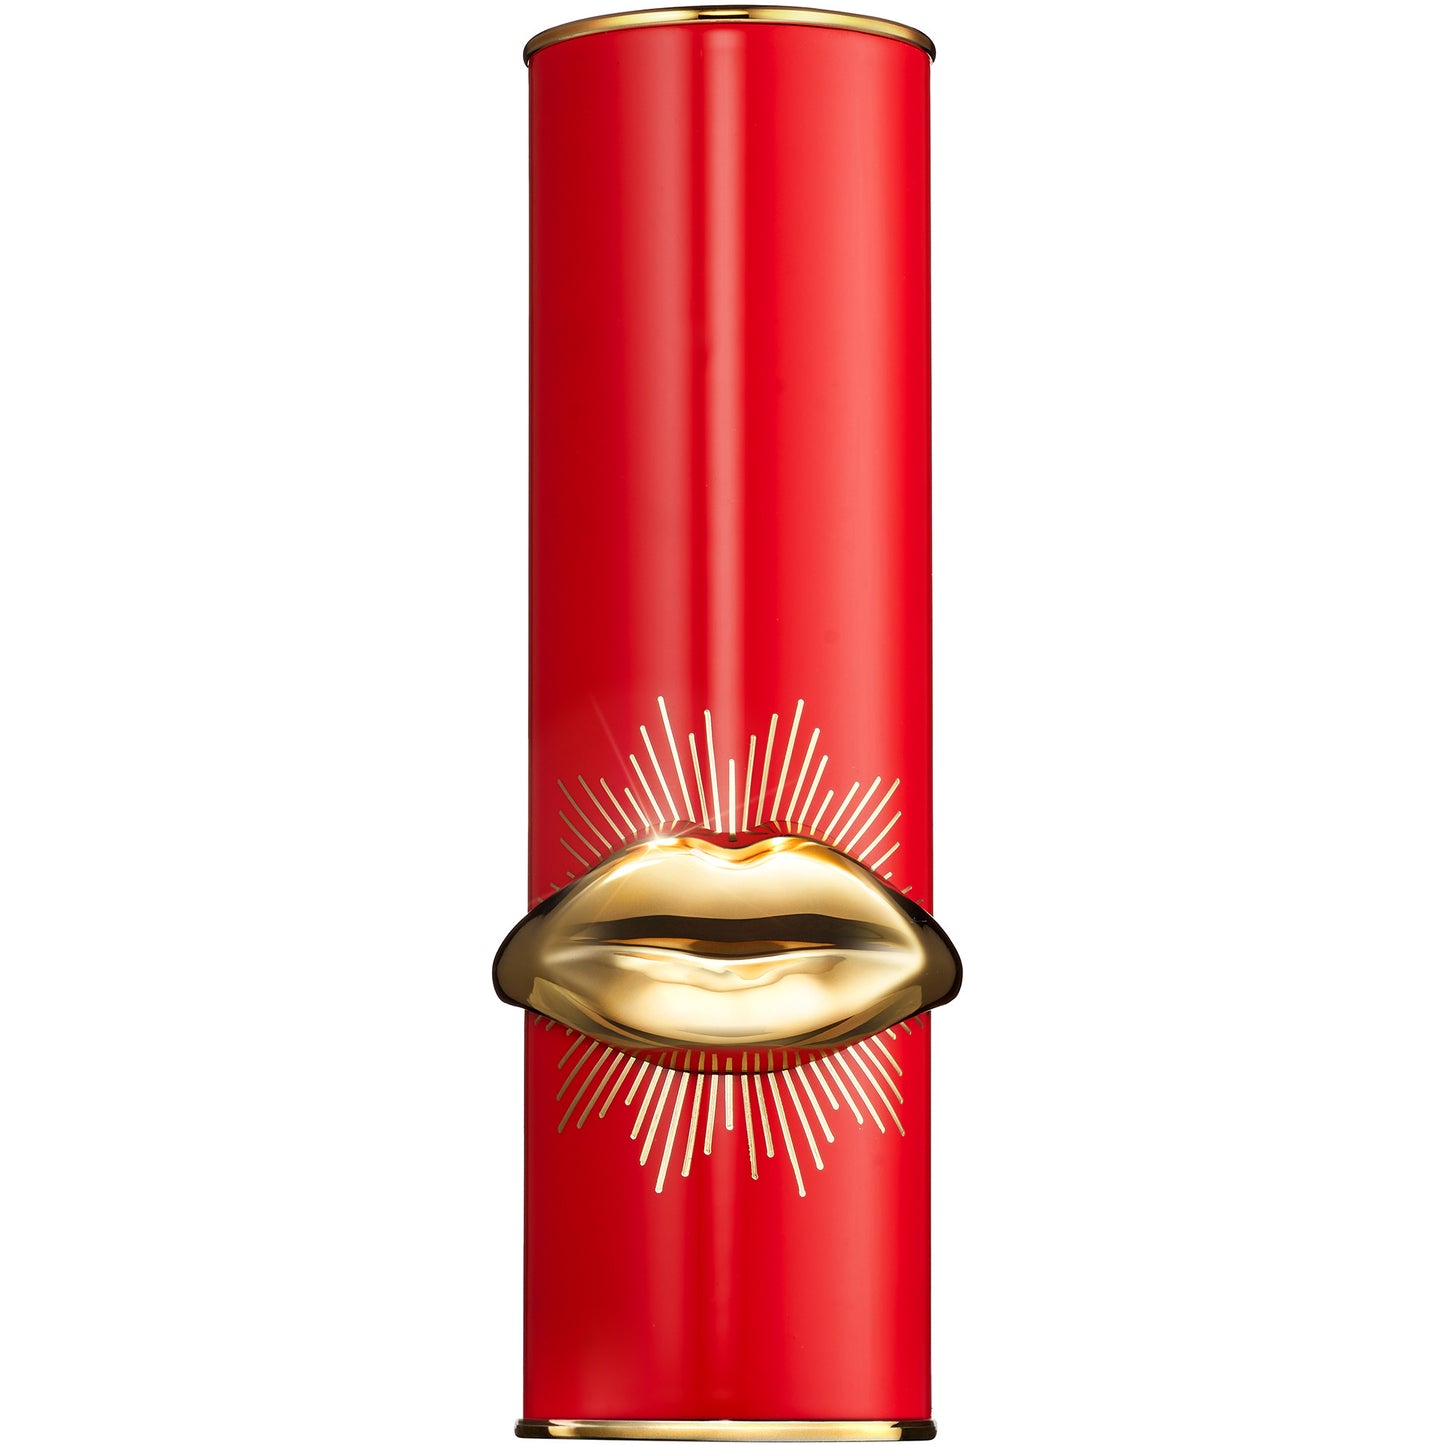 PAT McGRATH LABS Lunar New Year Collection: Lipstick